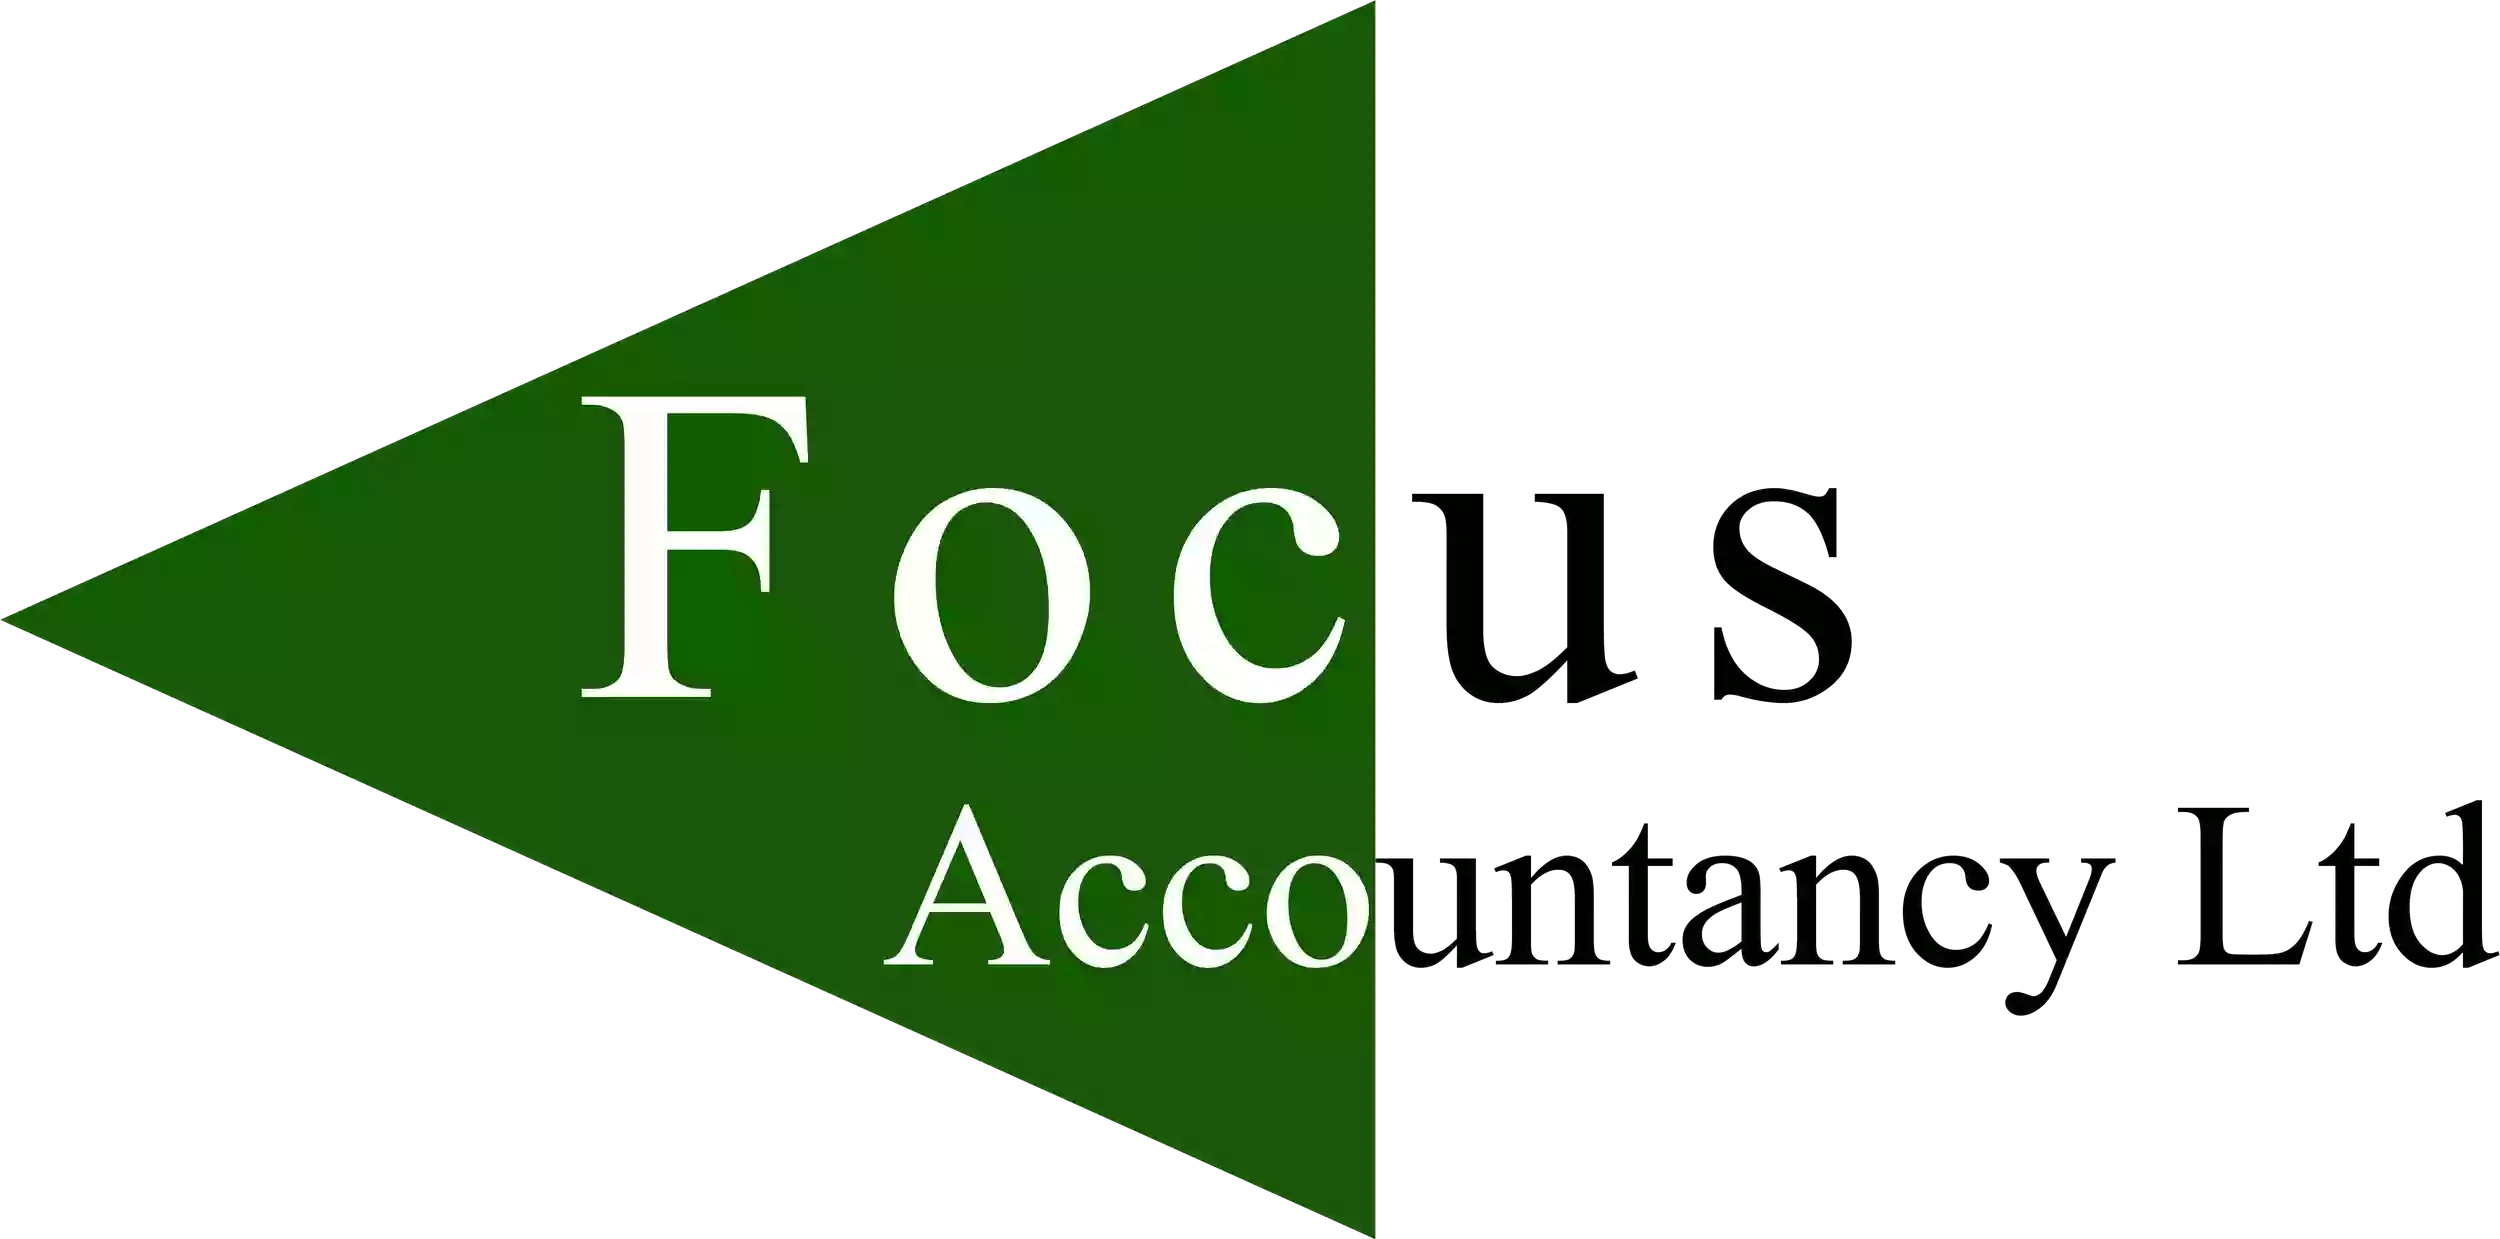 Focus Accountancy Ltd